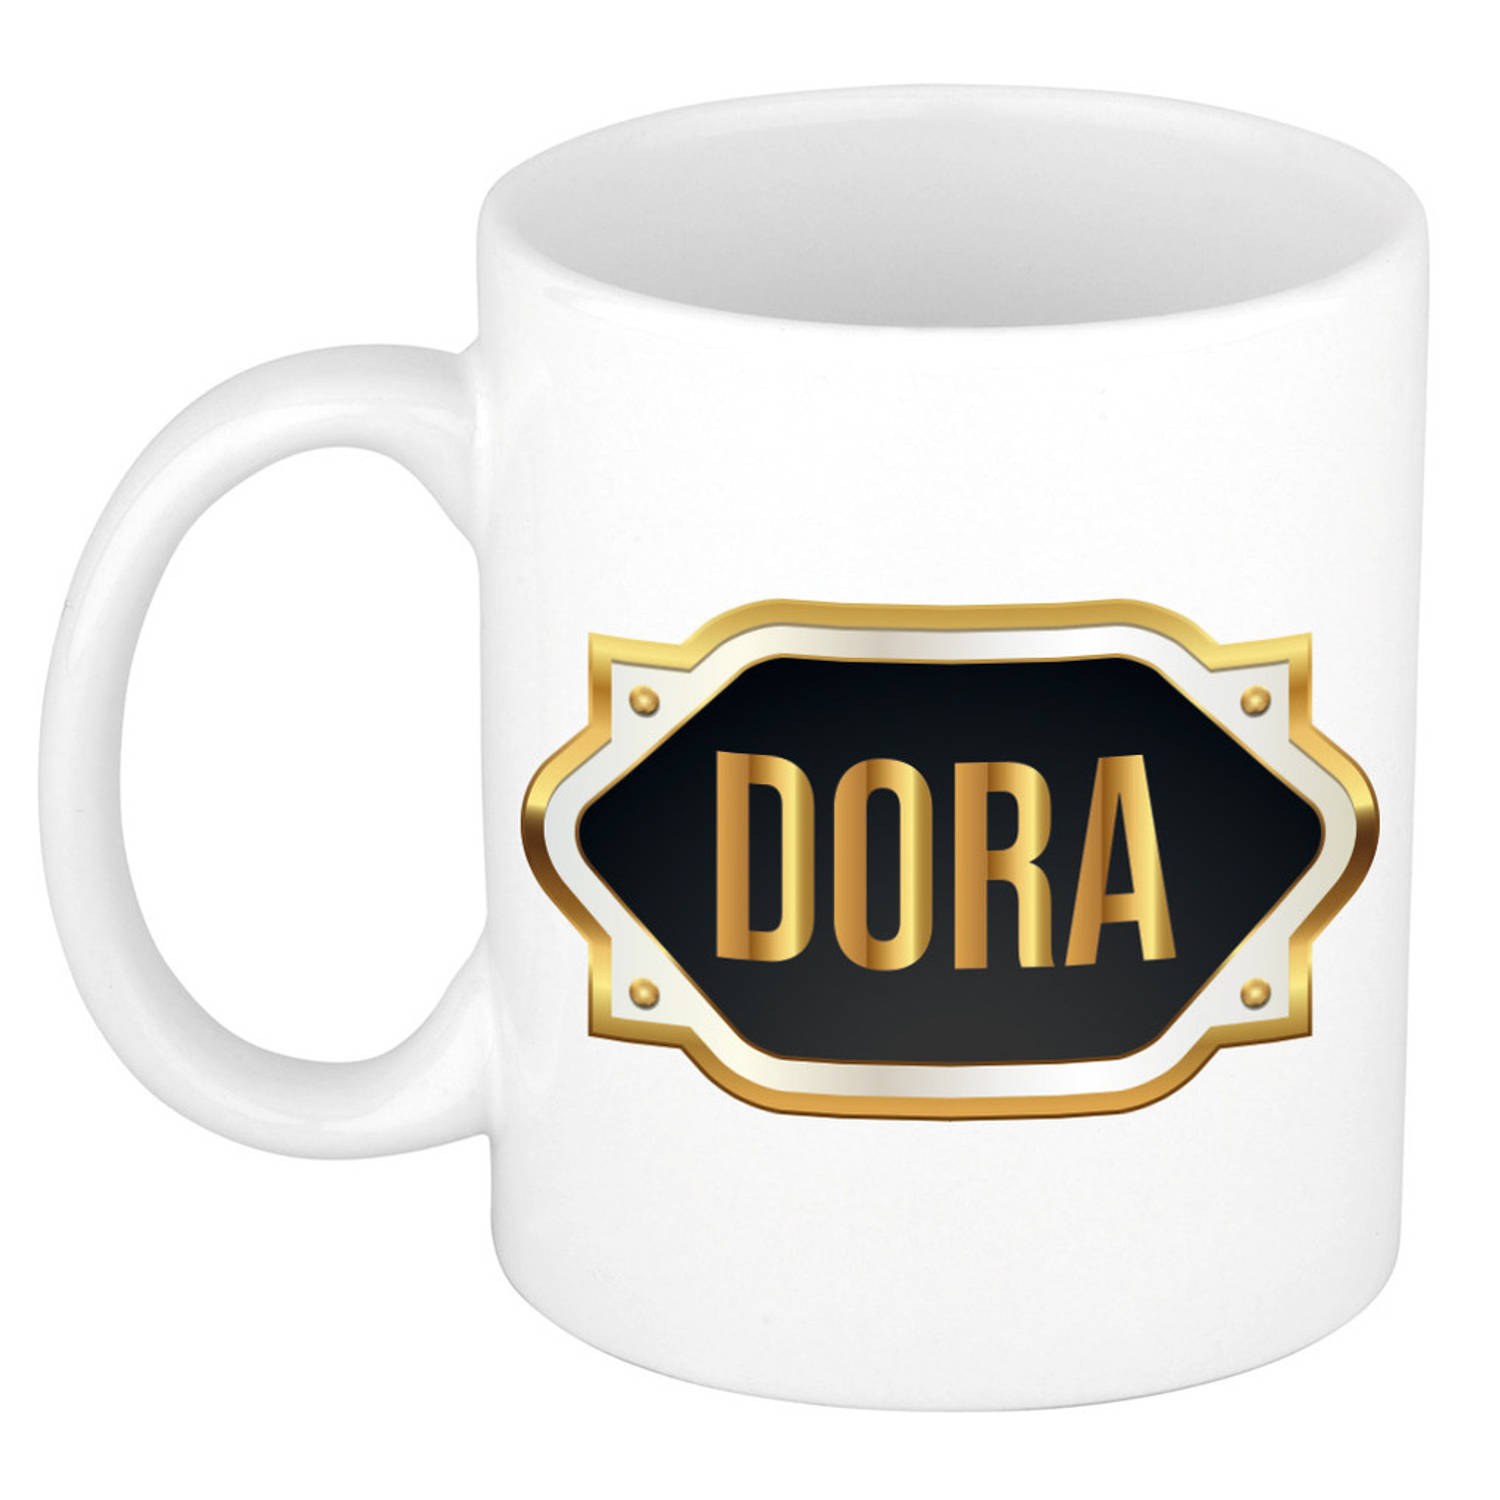 Dora naam / voornaam kado beker / mok met goudkleurig embleem - Naam mokken